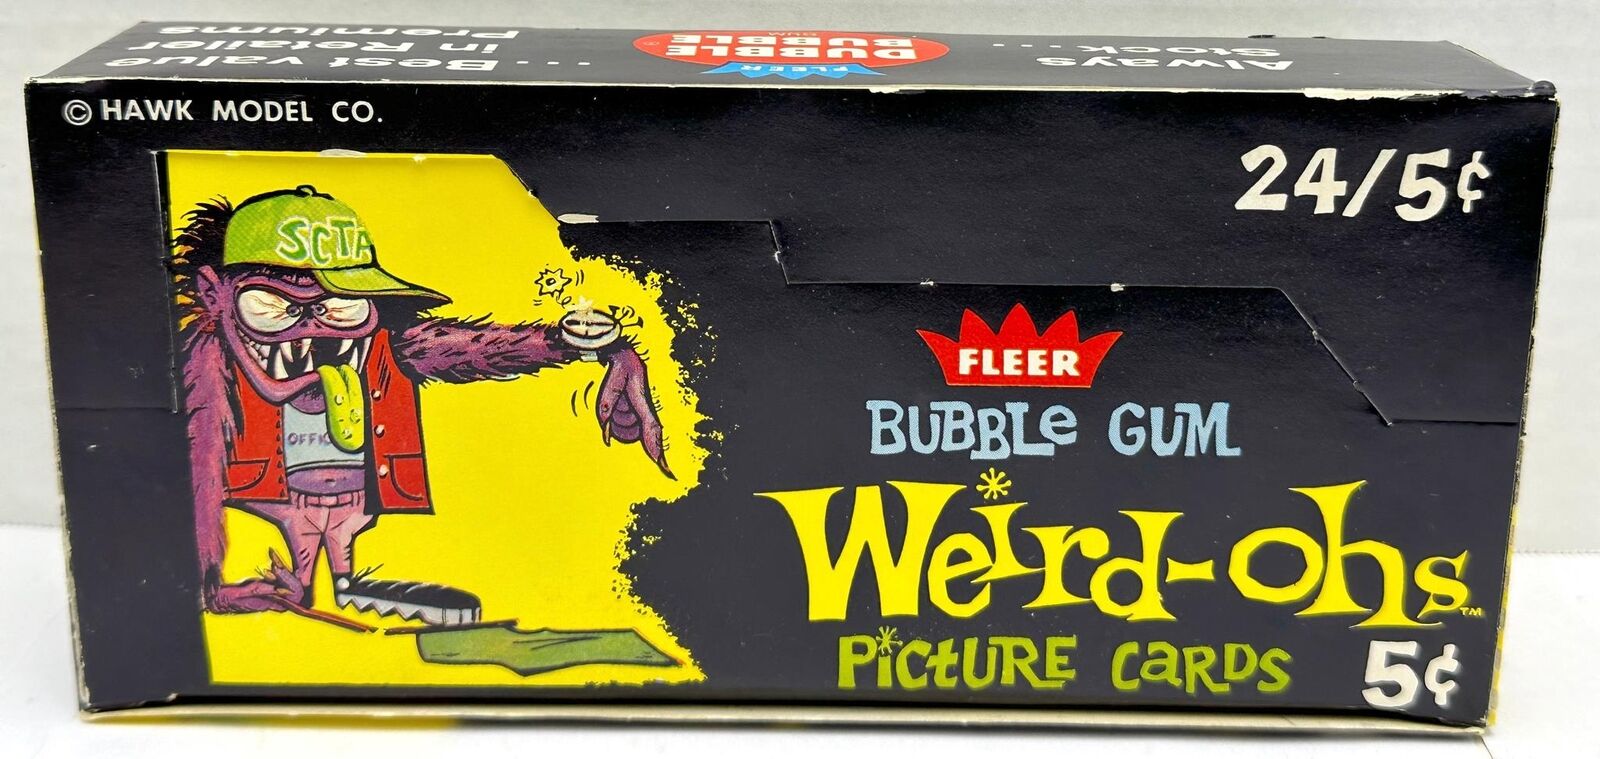 1965 Fleer Weird-ohs Baseball Vintage Wax Trading Card Box Full 24 Packs